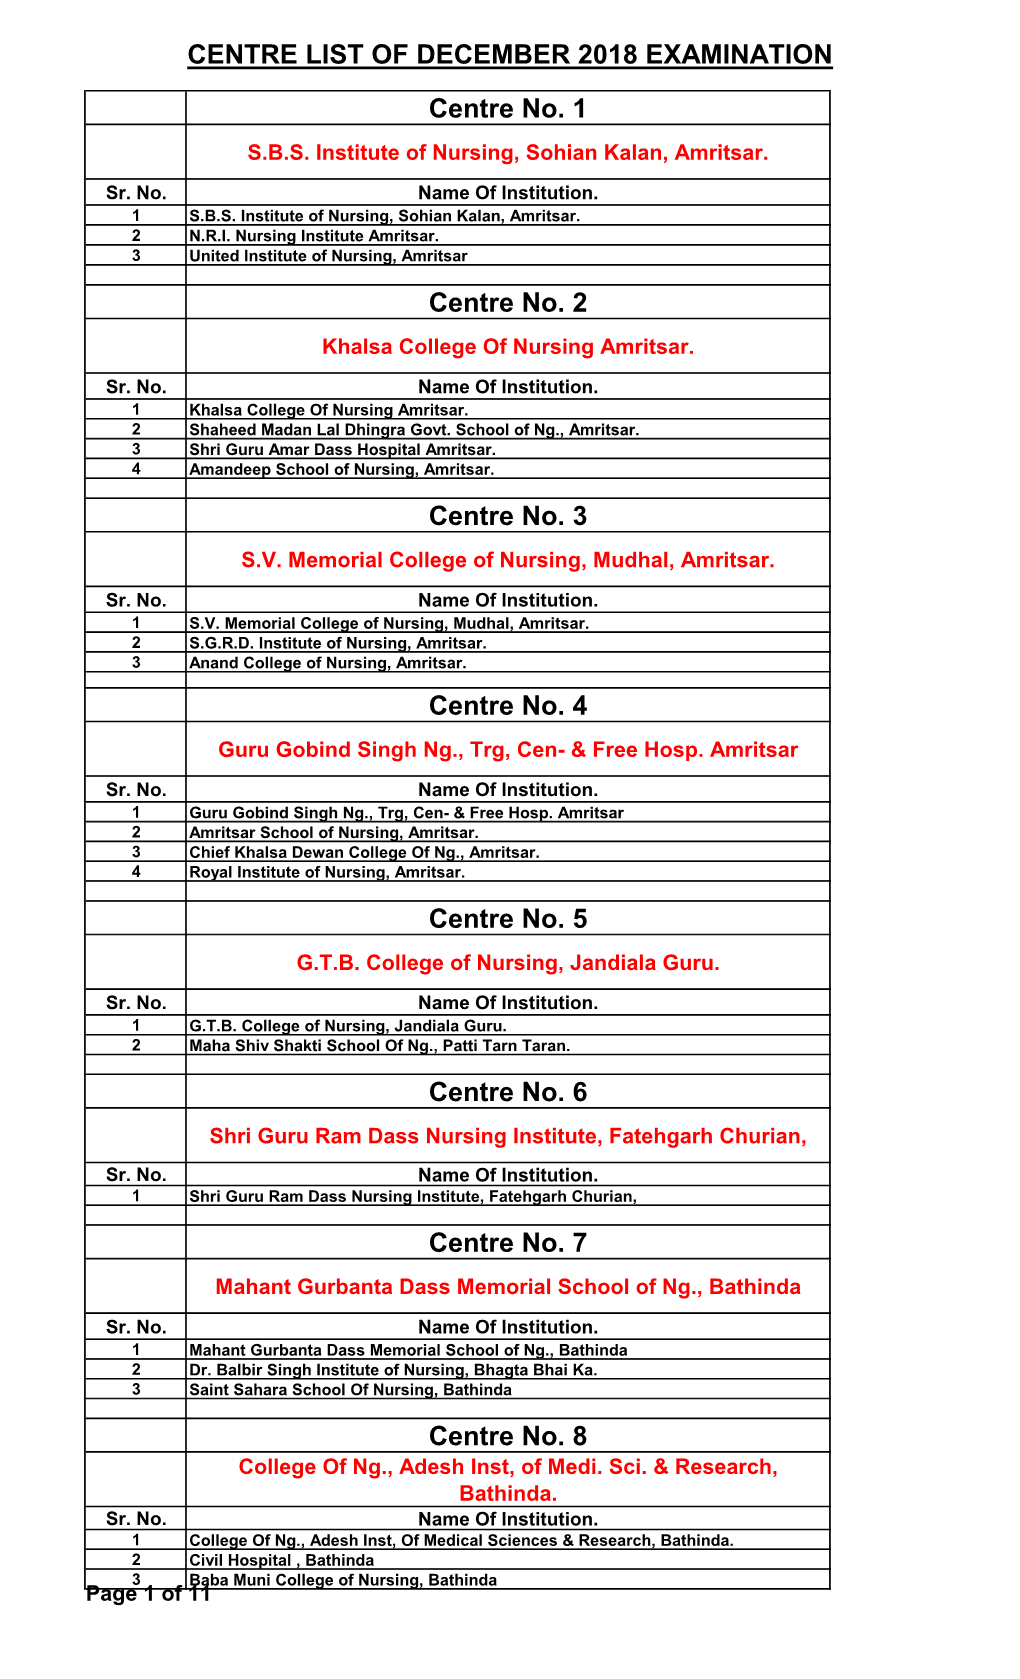 Revised Centre List of December-2018 Examination